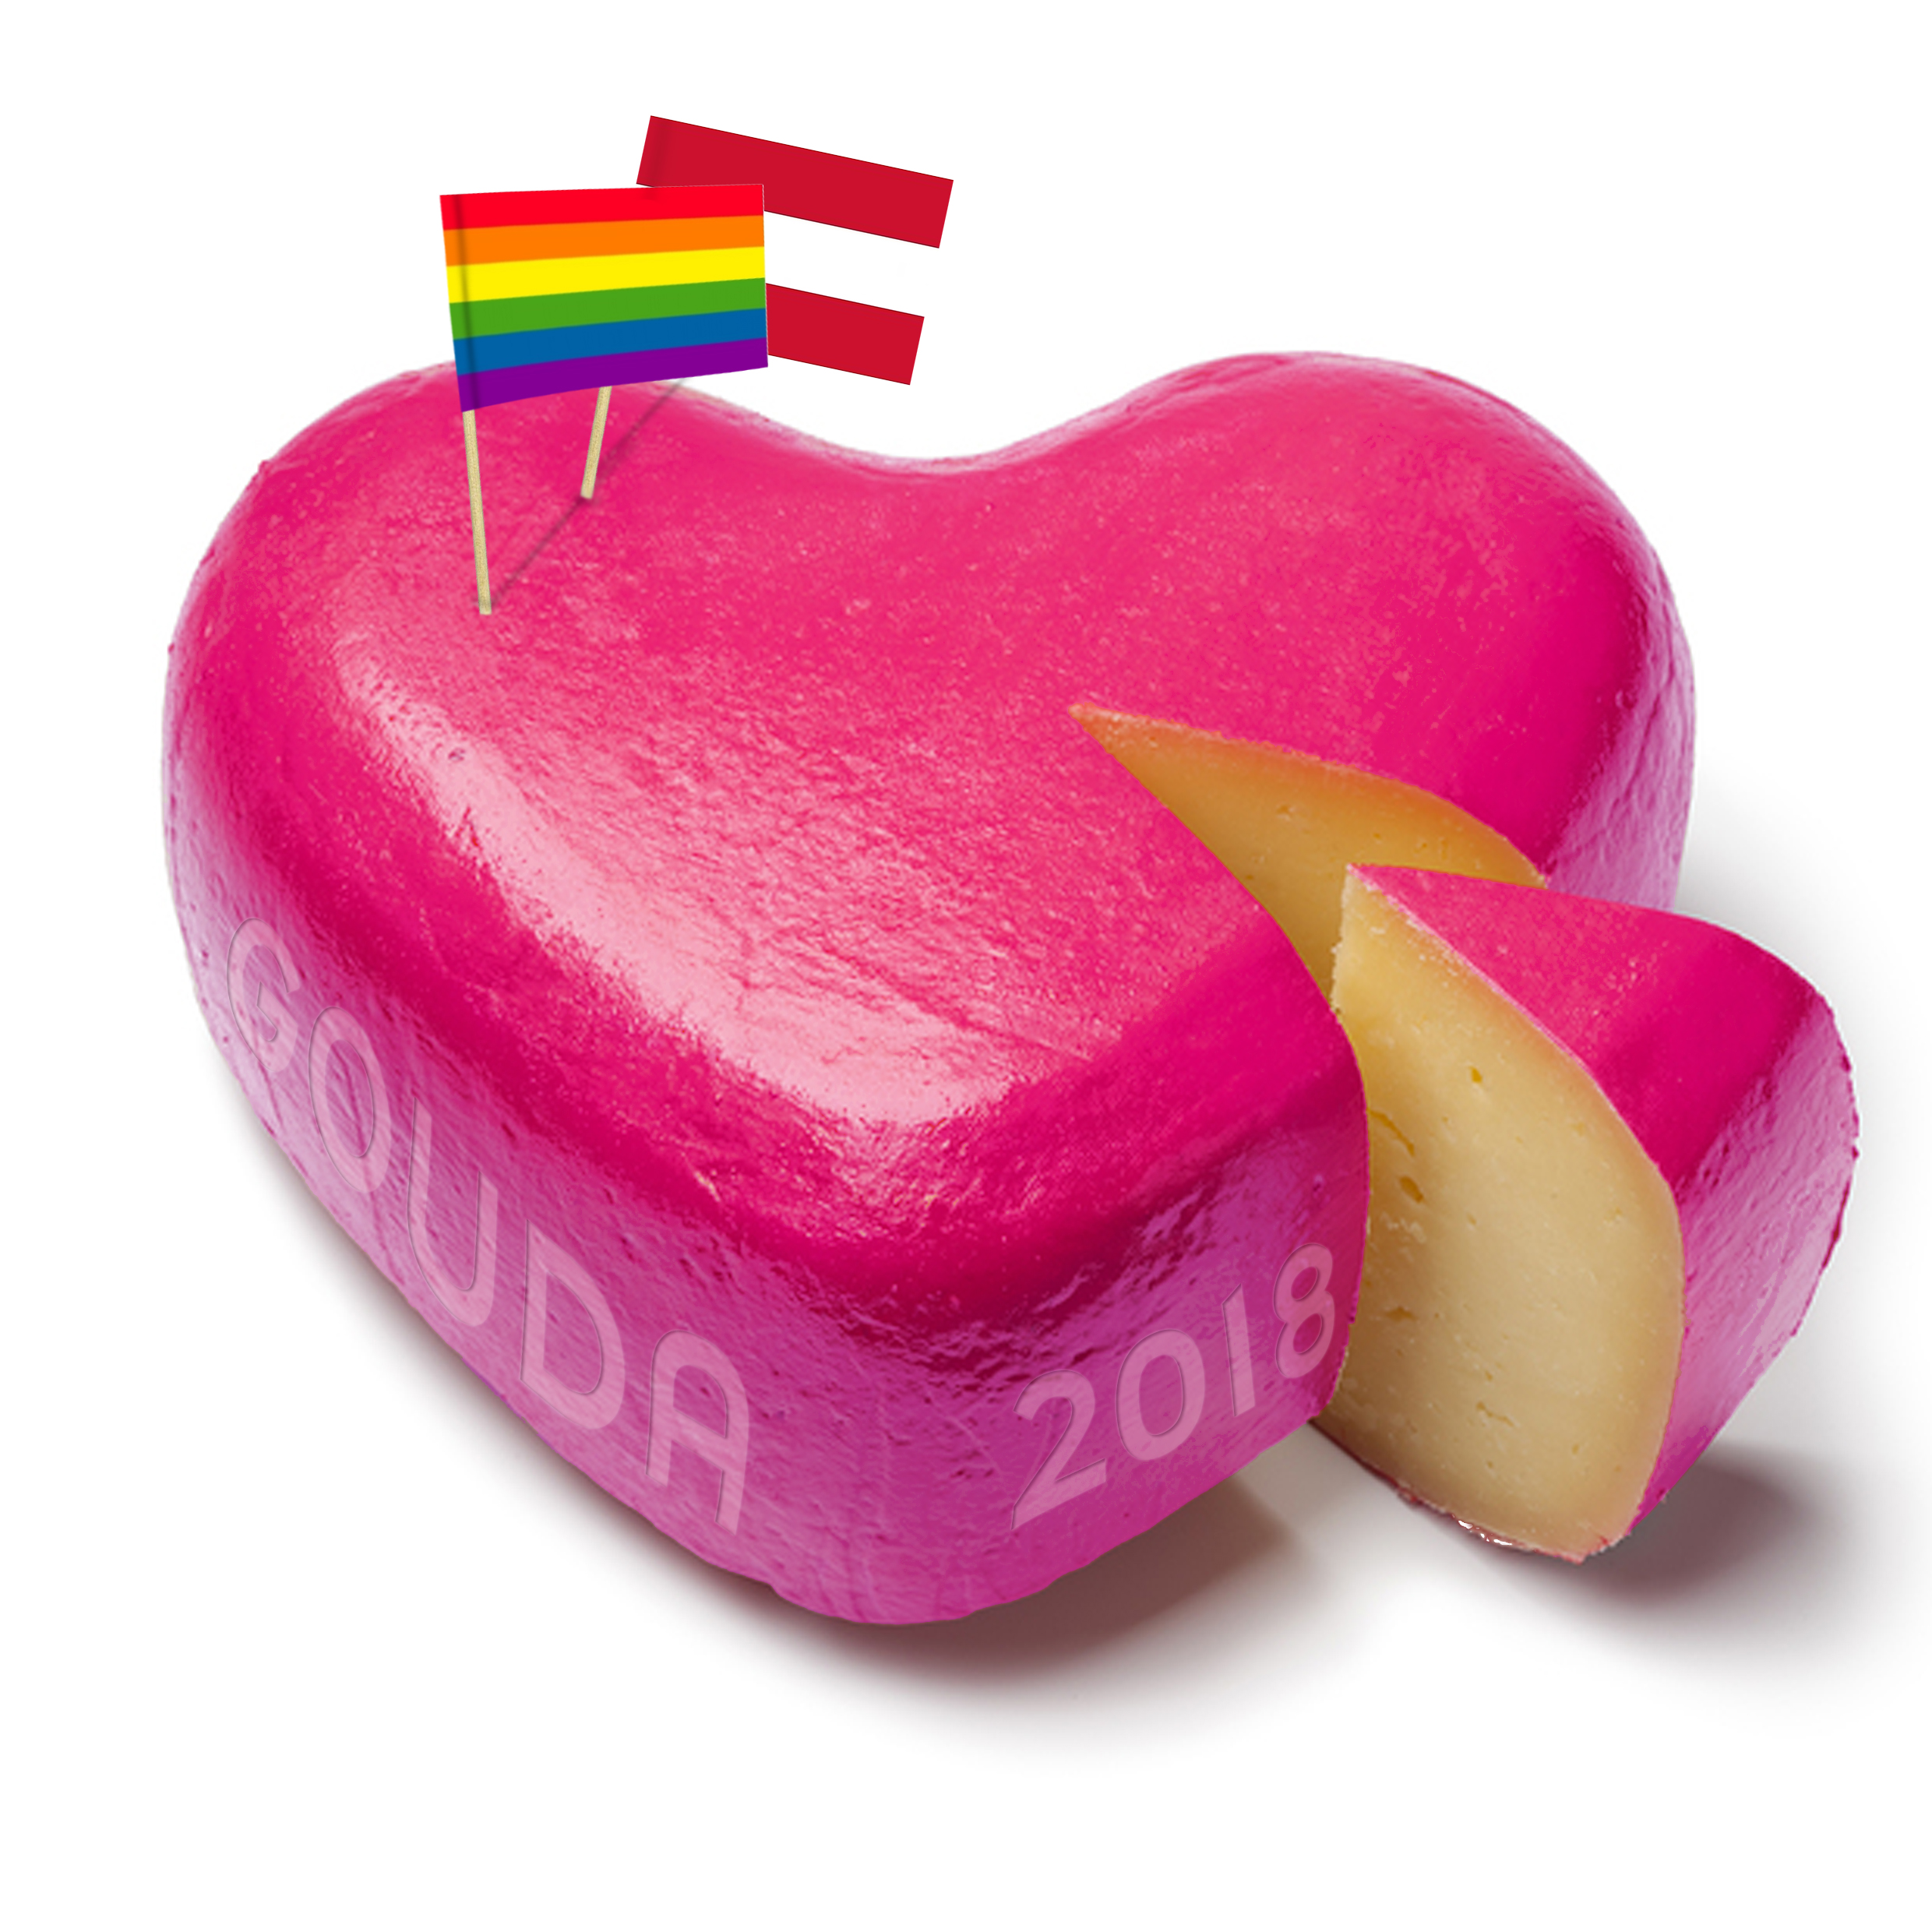 Speciale gayfeest in Gouda